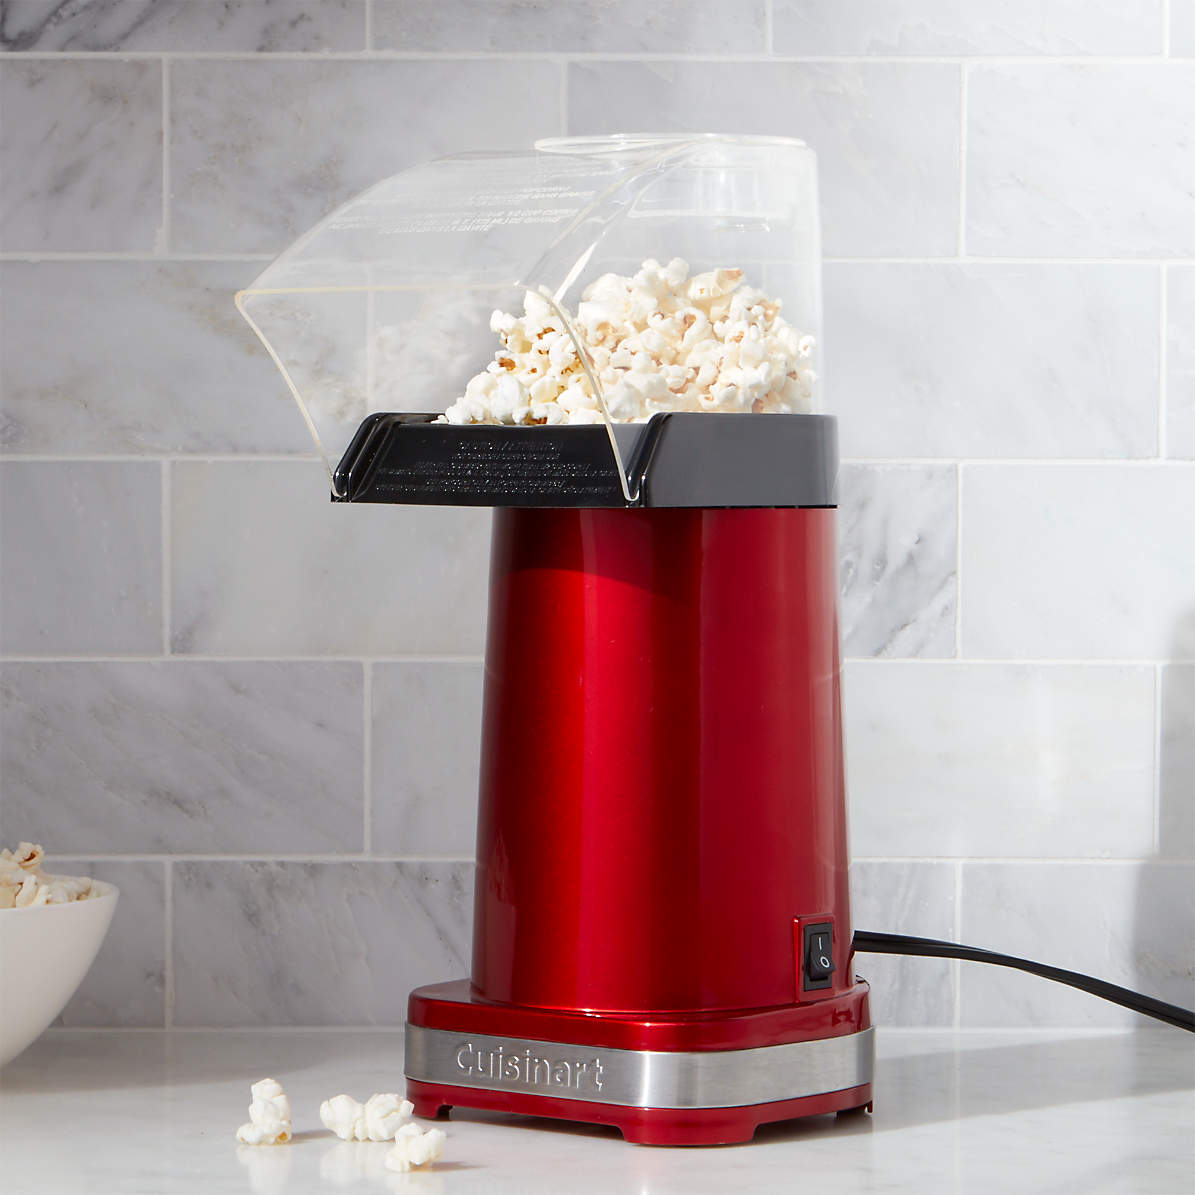 Cuisinart EasyPop Red Popcorn Maker CPM700 - Overview